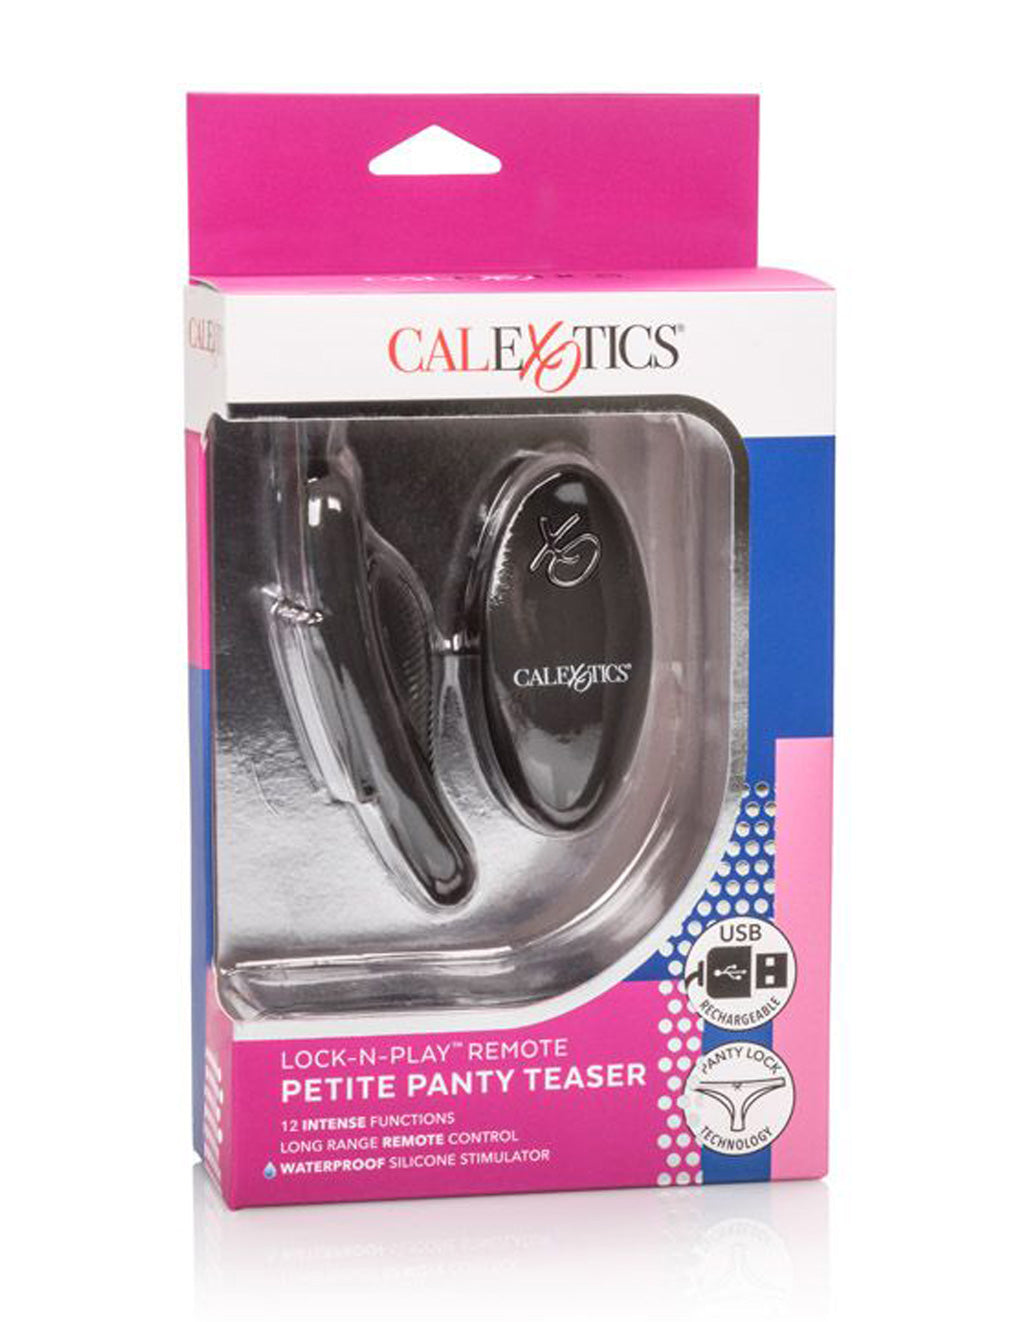 Cal Exotics Lock-N-Play Remote Petite Panty Teaser packaging front